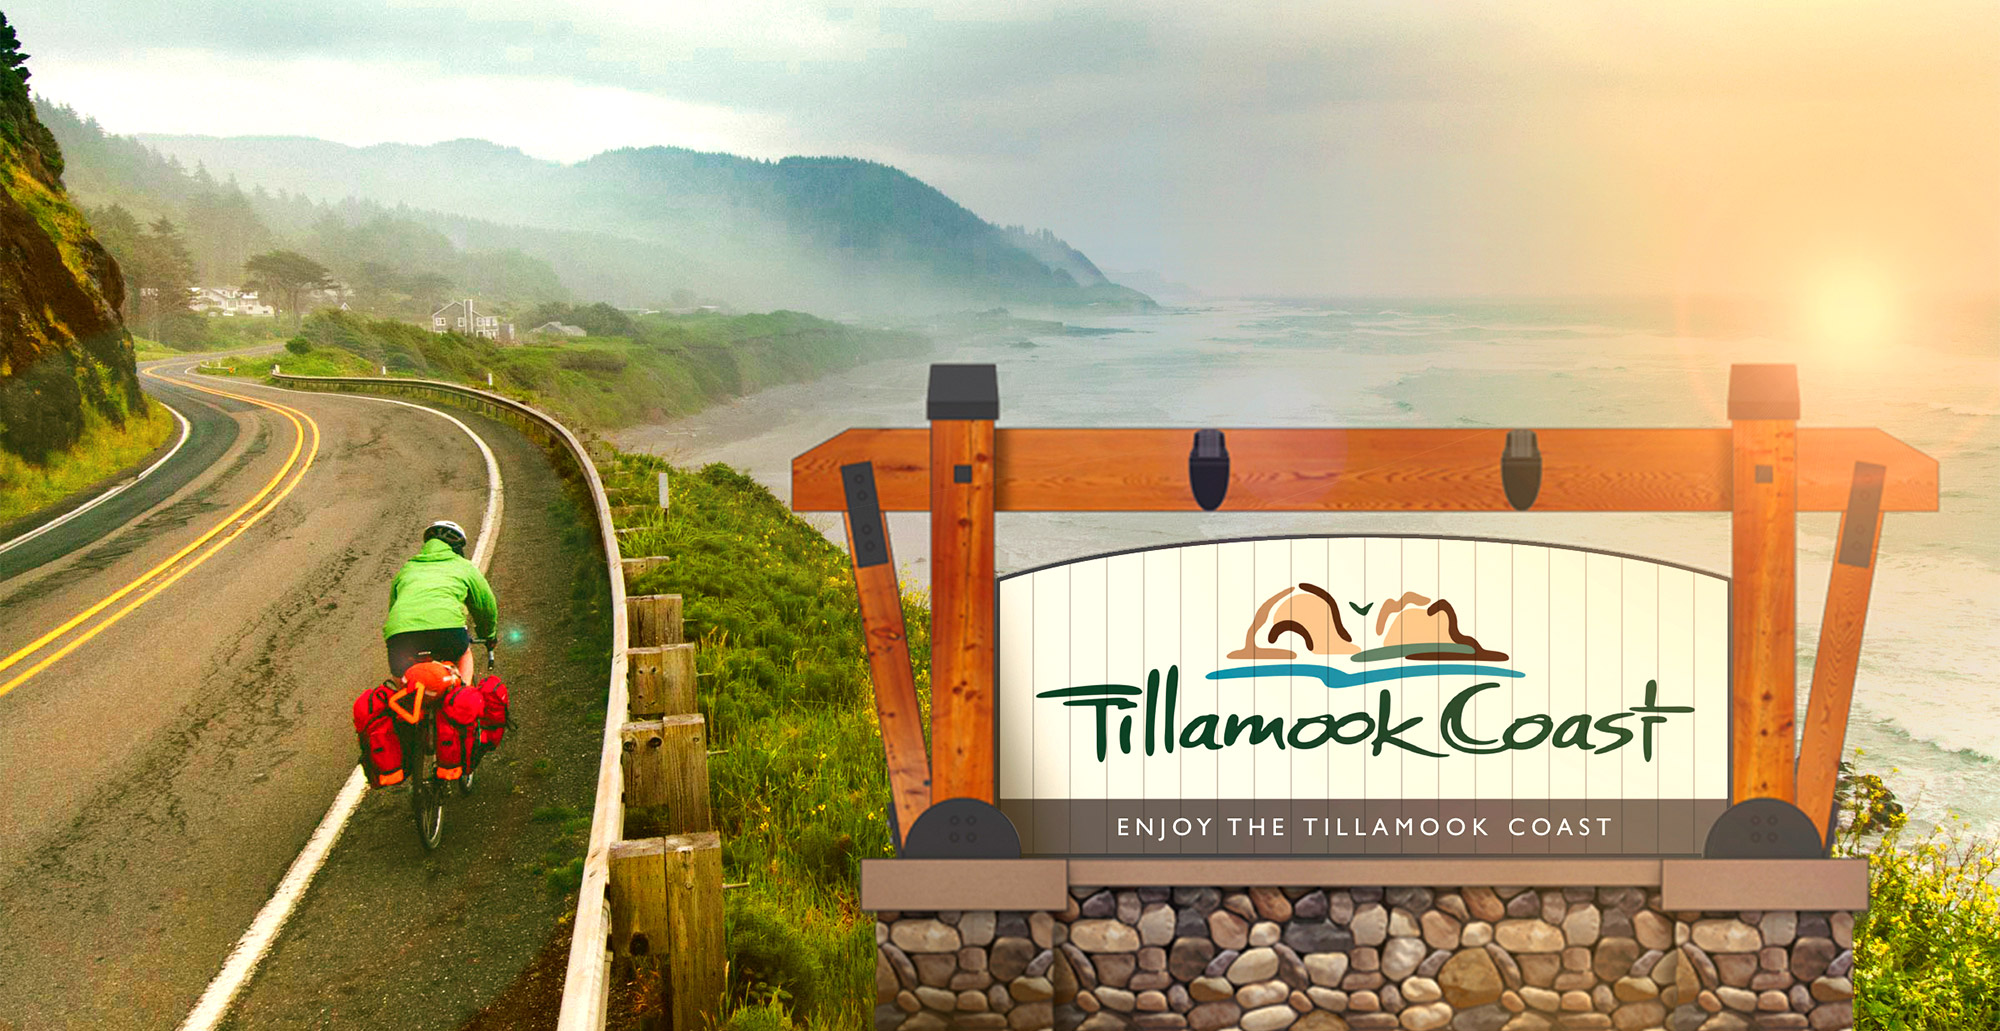 Tillamook Coast gateway sign